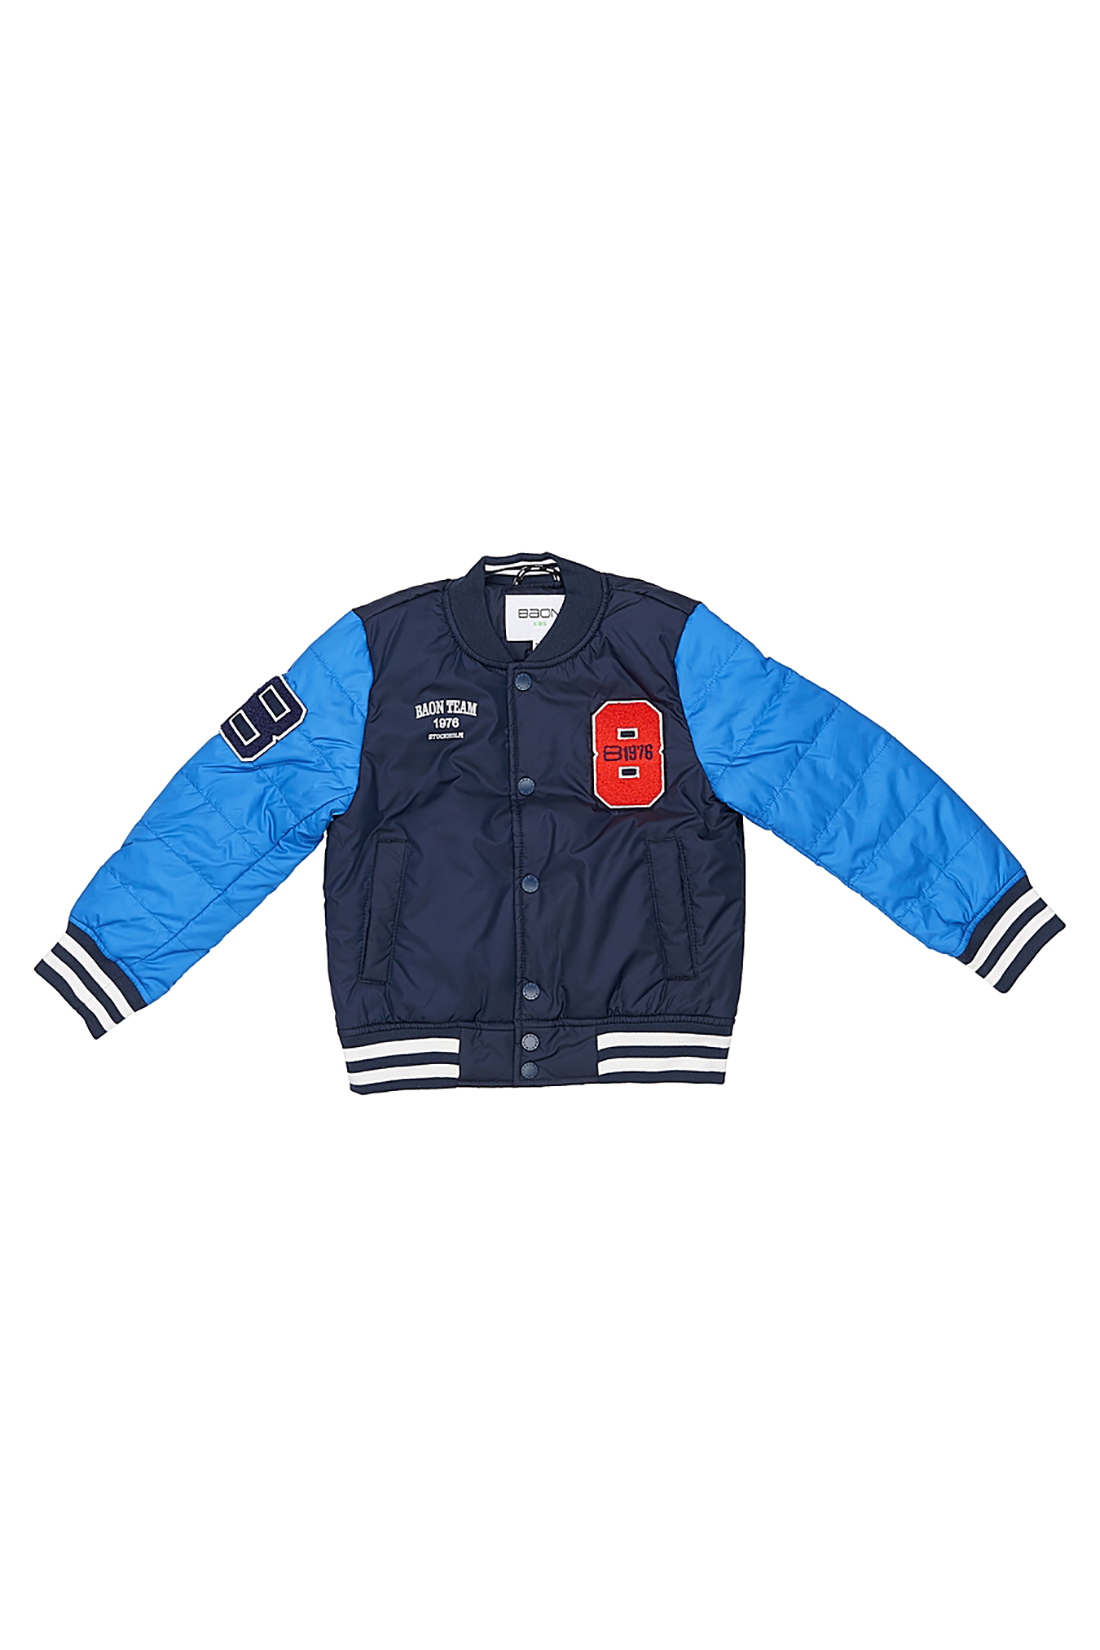 Куртка для мальчика (арт. baon BK538003), размер 110-116, цвет синий Куртка для мальчика (арт. baon BK538003) - фото 4